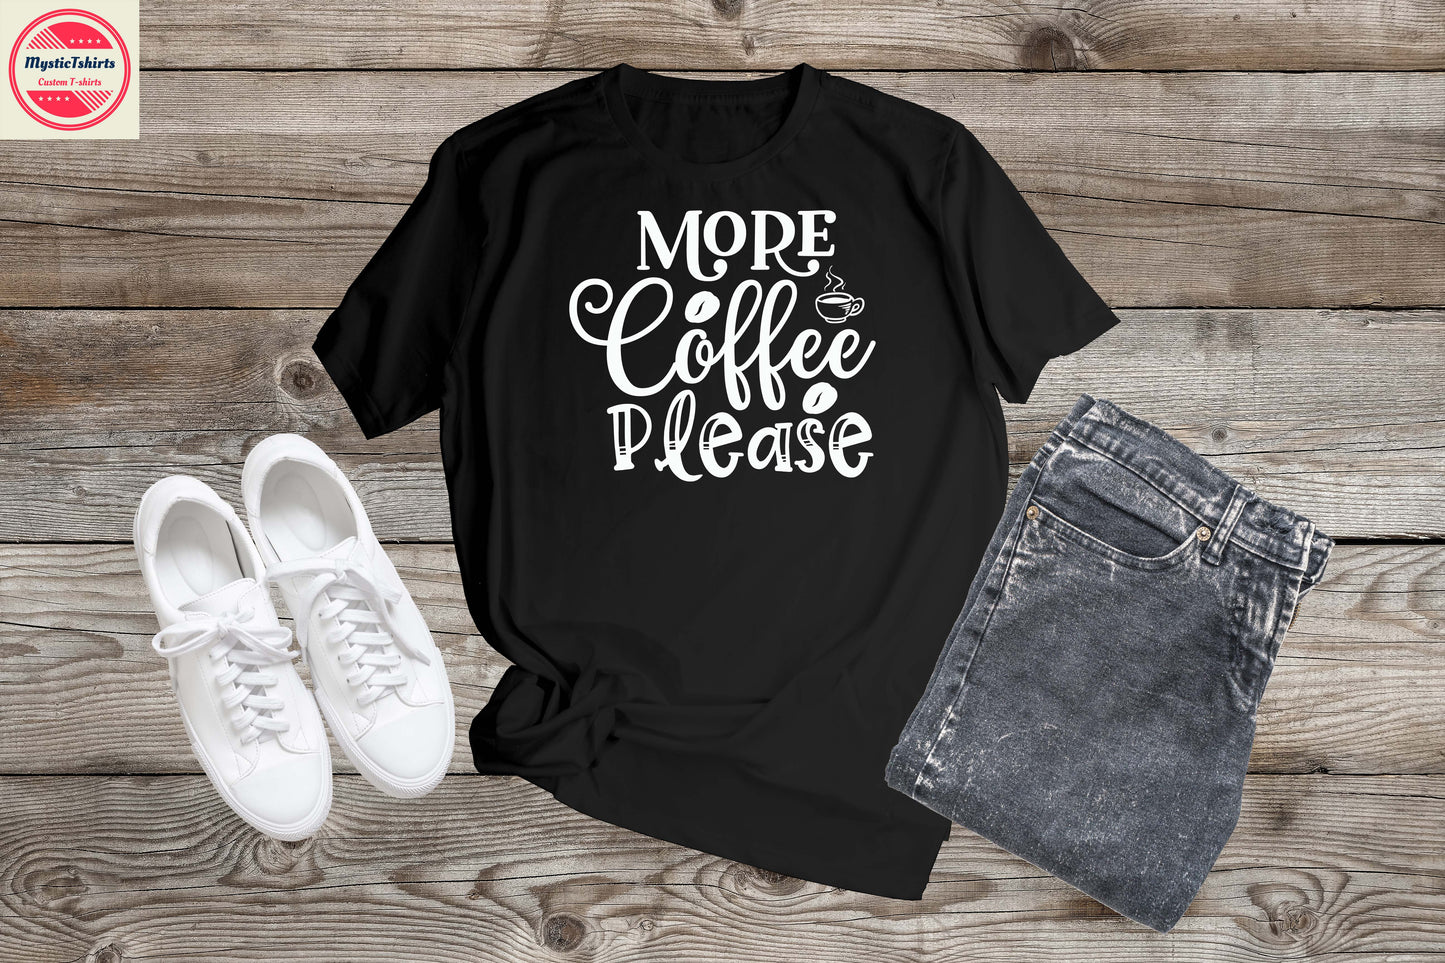 373. MORE COFFEE PLEASE, Custom Made Shirt, Personalized T-Shirt, Custom Text, Make Your Own Shirt, Custom Tee